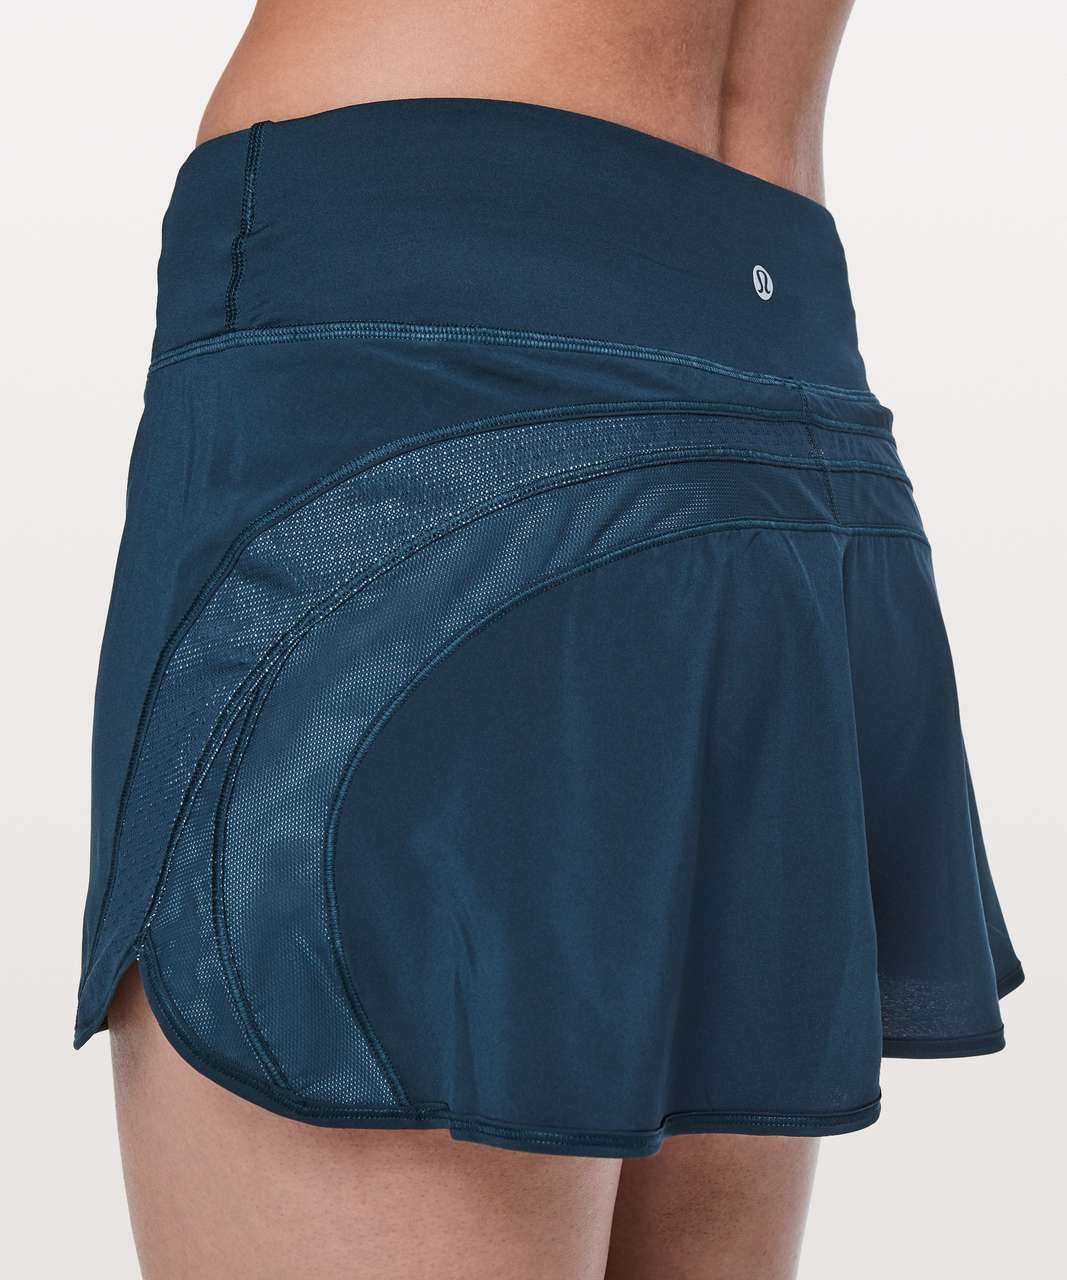 Lululemon Photo Finish Skirt *13.5" - Jet Blue / Cascade Blue